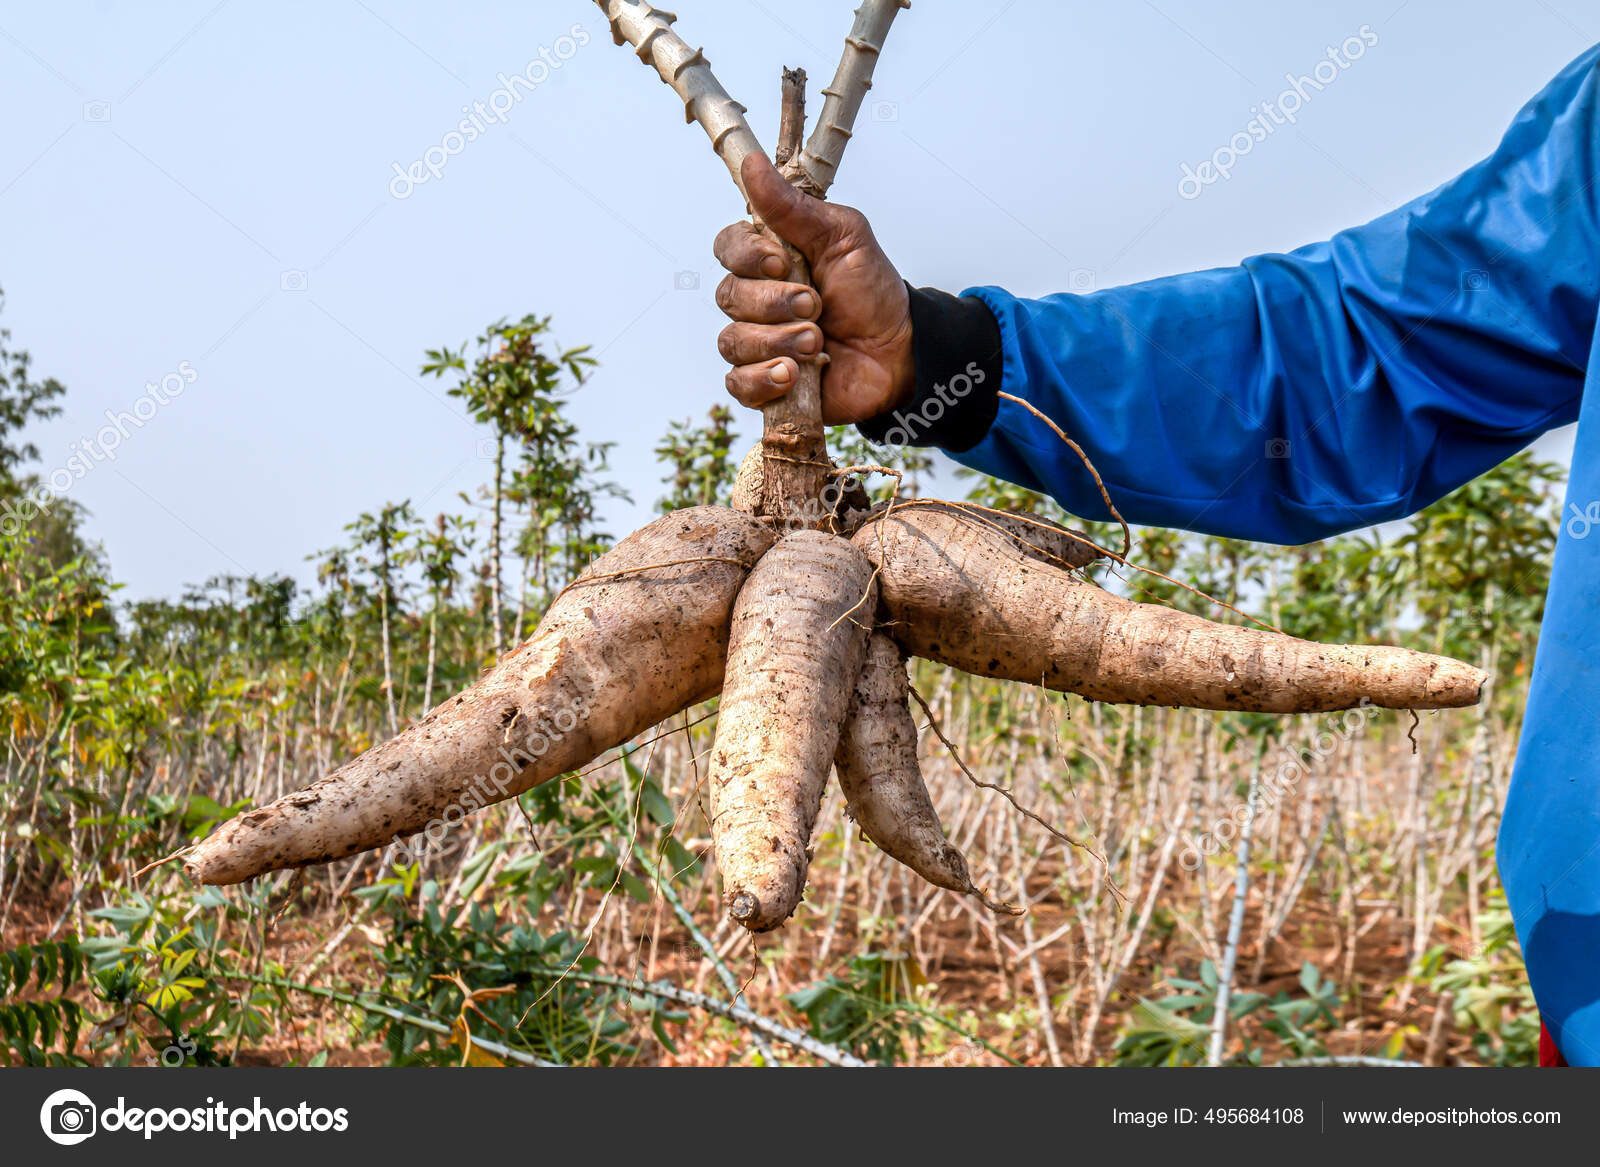 Cassava Hand Tapioca Hand Harvest Season Cassava Plantation Land Stock Photo ©cgdeaw 495684108